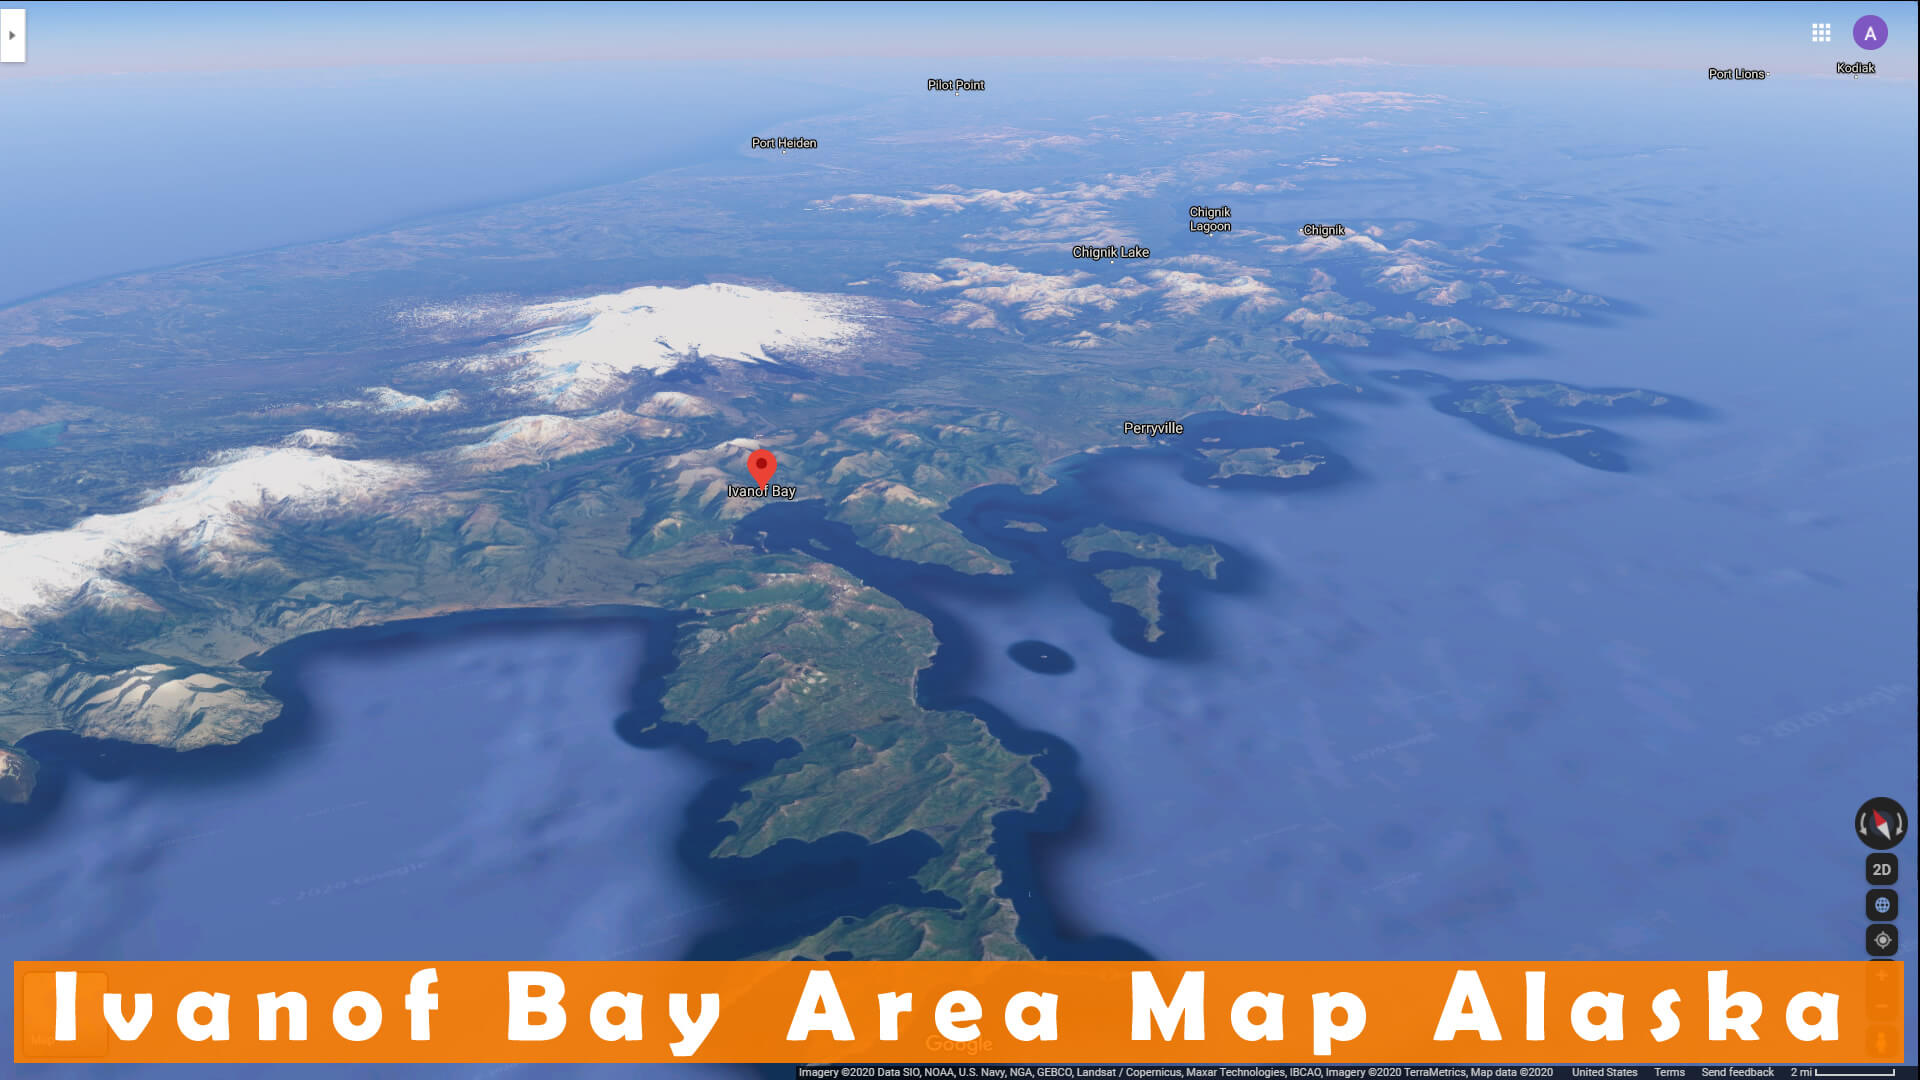 Ivanof Bay Area Map Alaska